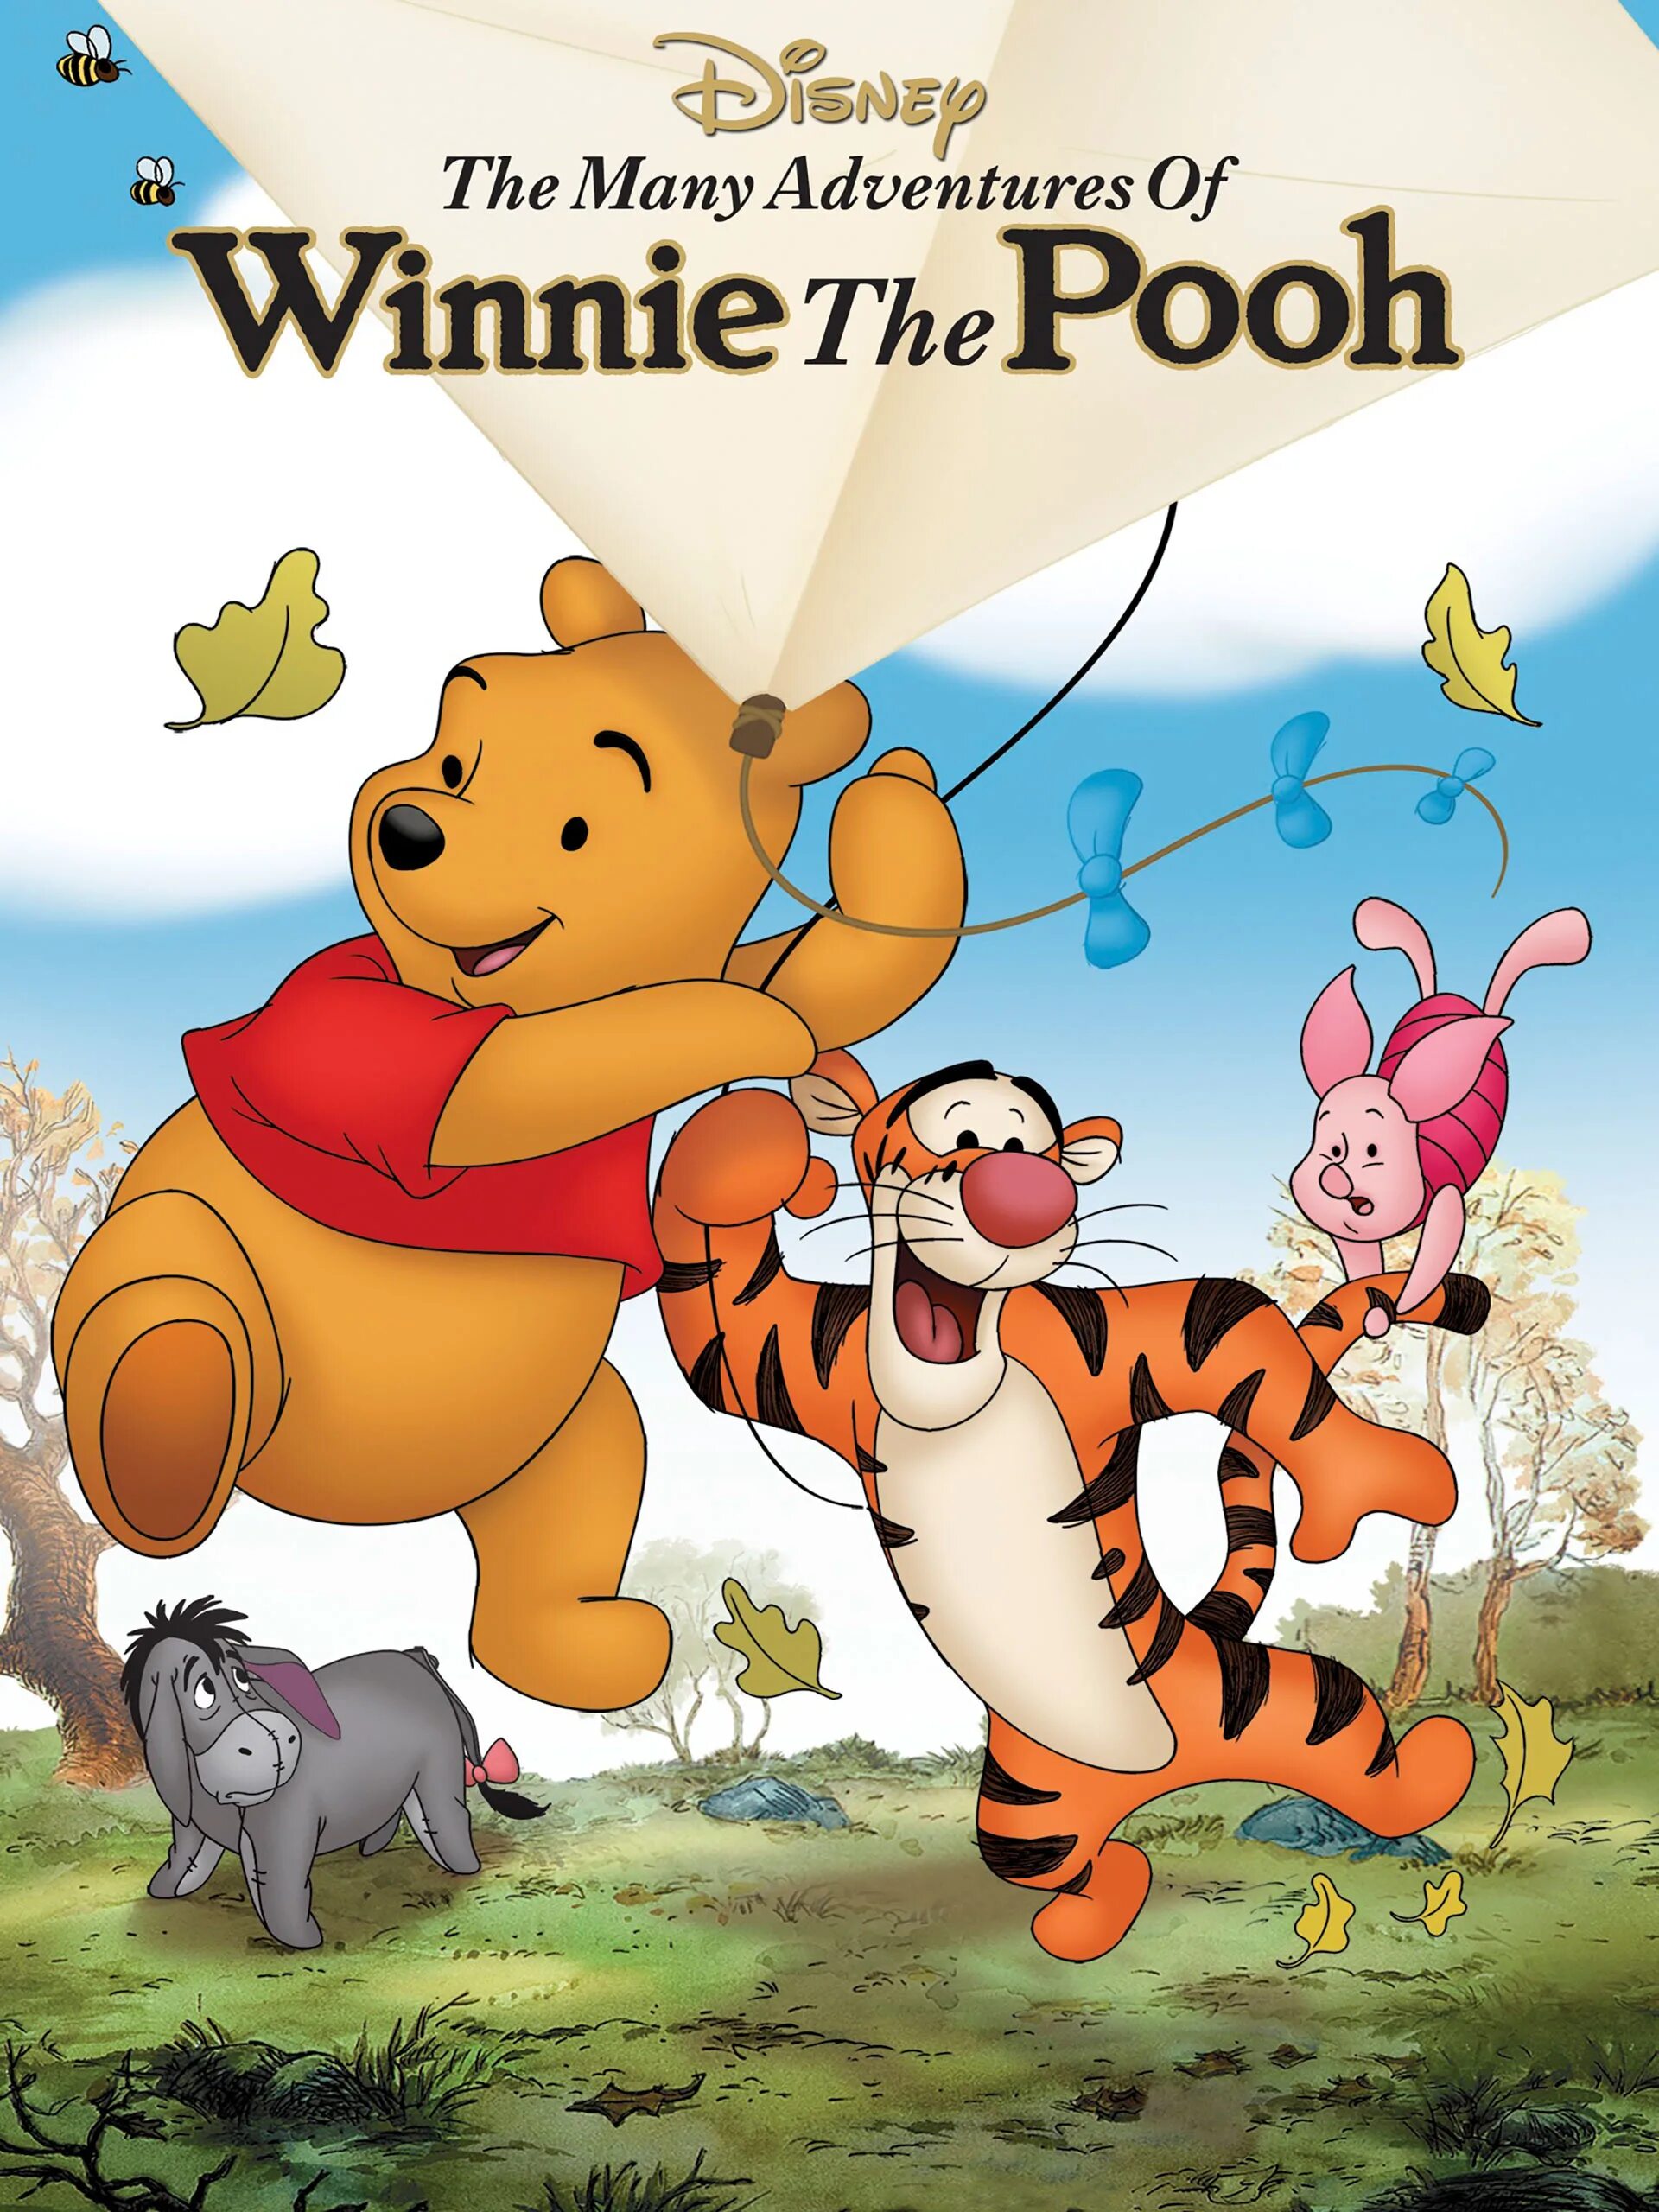 Winnie the pooh adventures. Винни пух 1977. Приключения Винни пуха. Приключения Винни пуха Дисней.